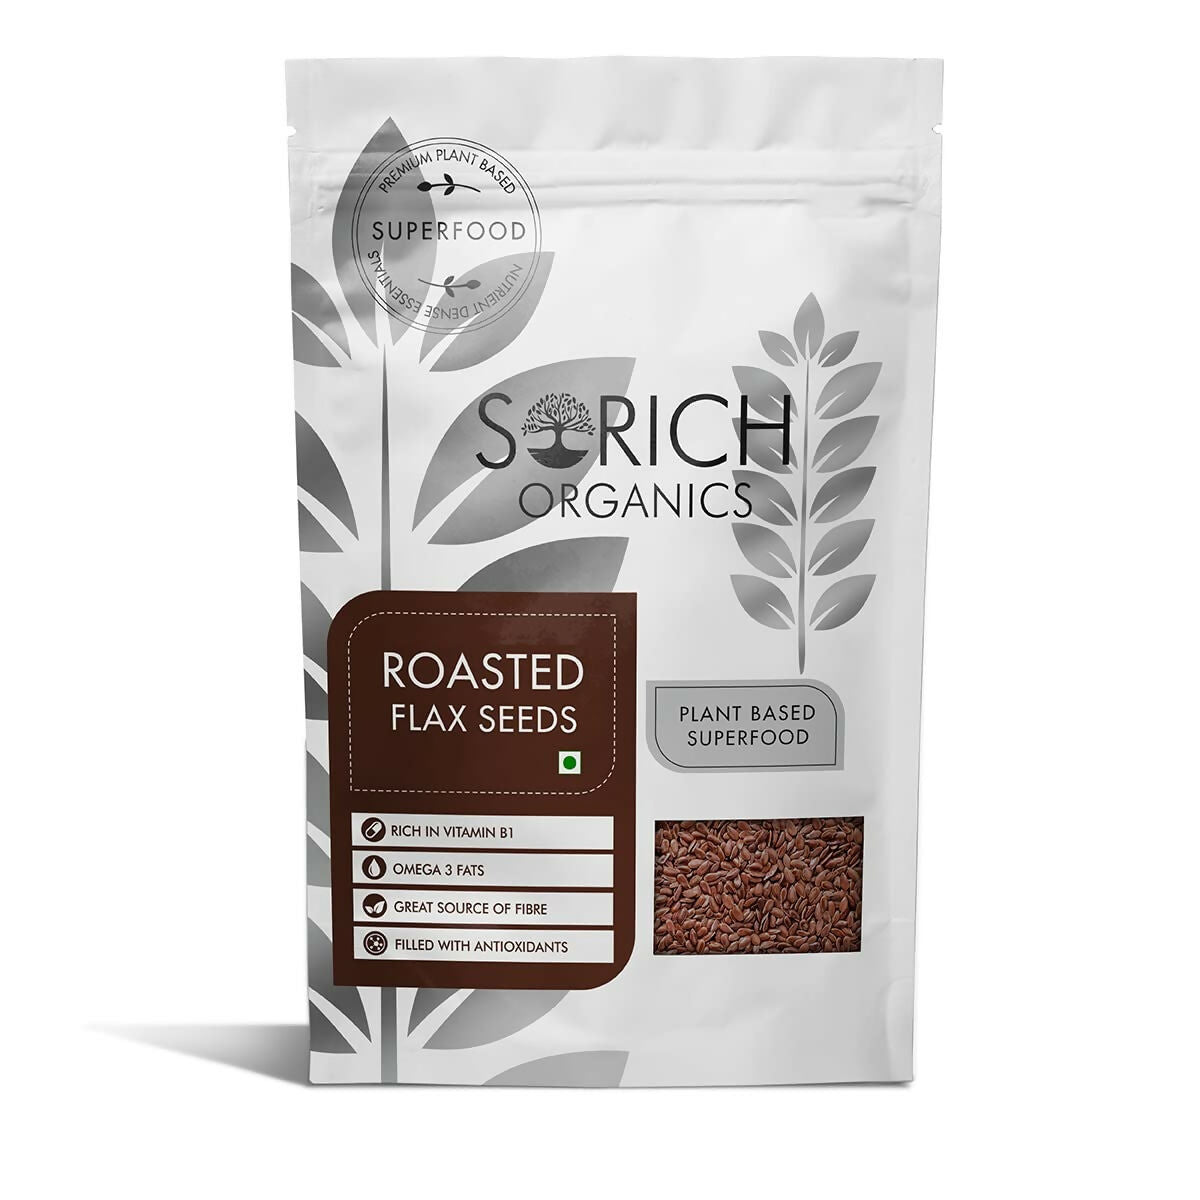 Sorich Organics Roasted Flax Seeds - BUDNE